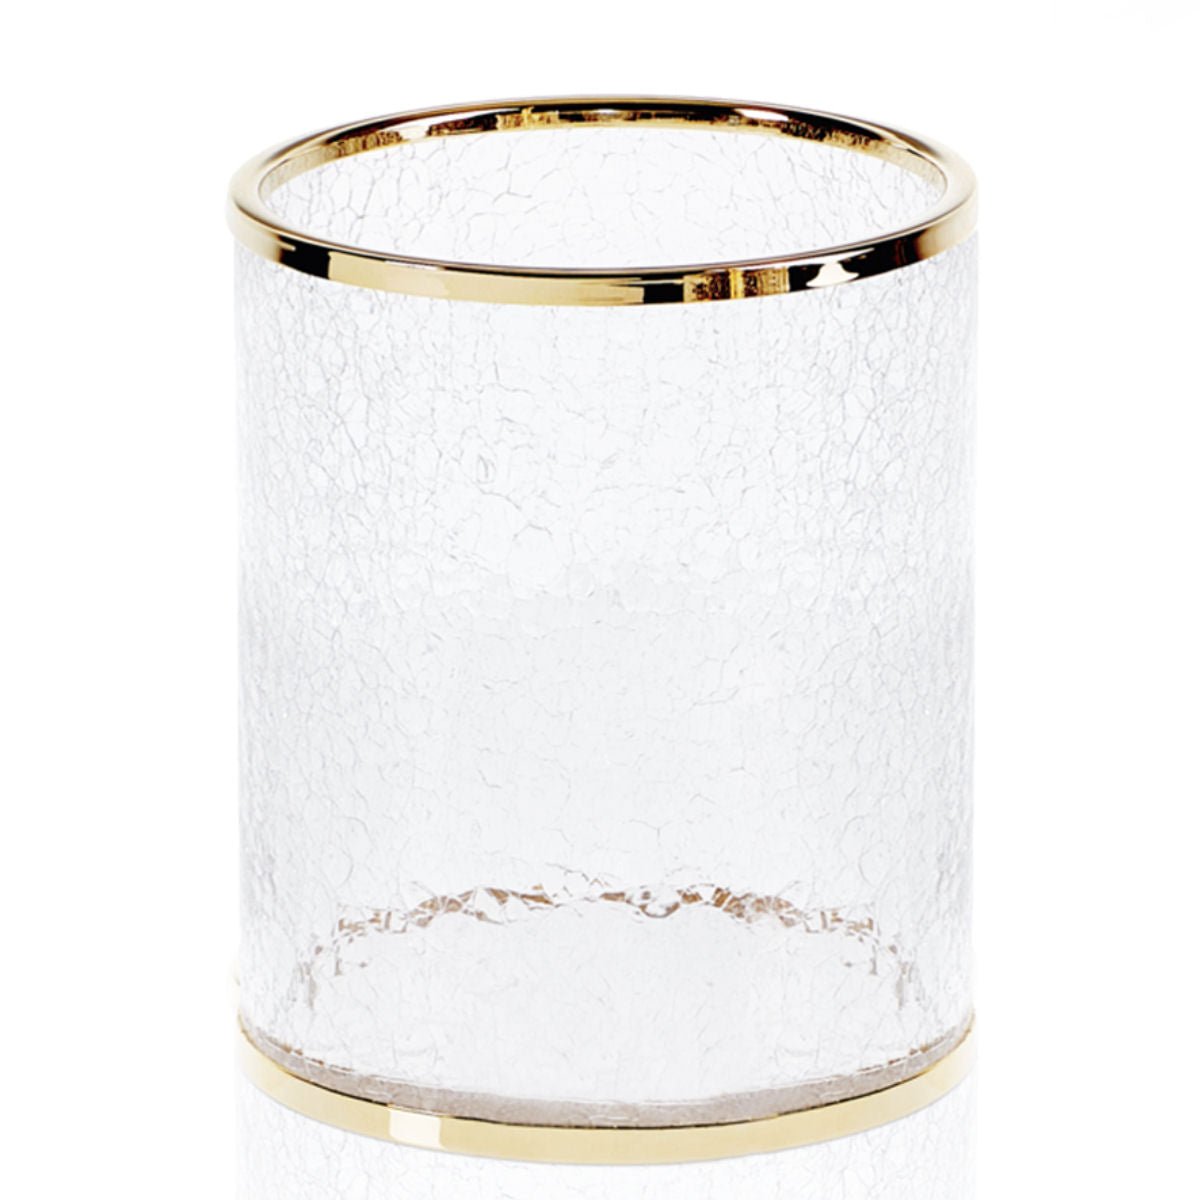 Luxury Cracked Glass Gold Bathroom Waste Bin by Decor Walther - |VESIMI Design|